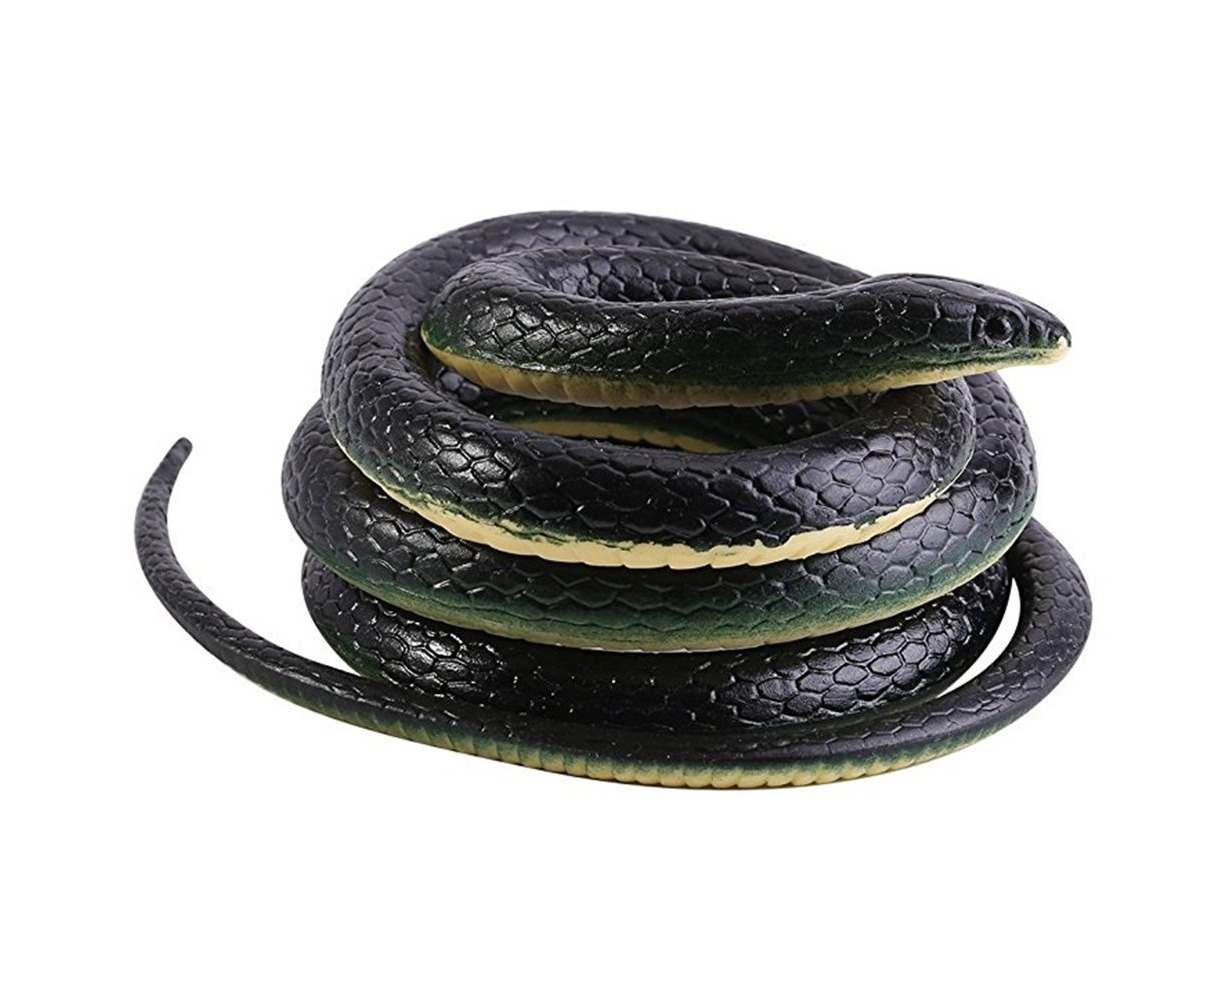 Rubber Snakes,130cm Realistic Soft Rubber Toy Snake black,Feral Garden ...